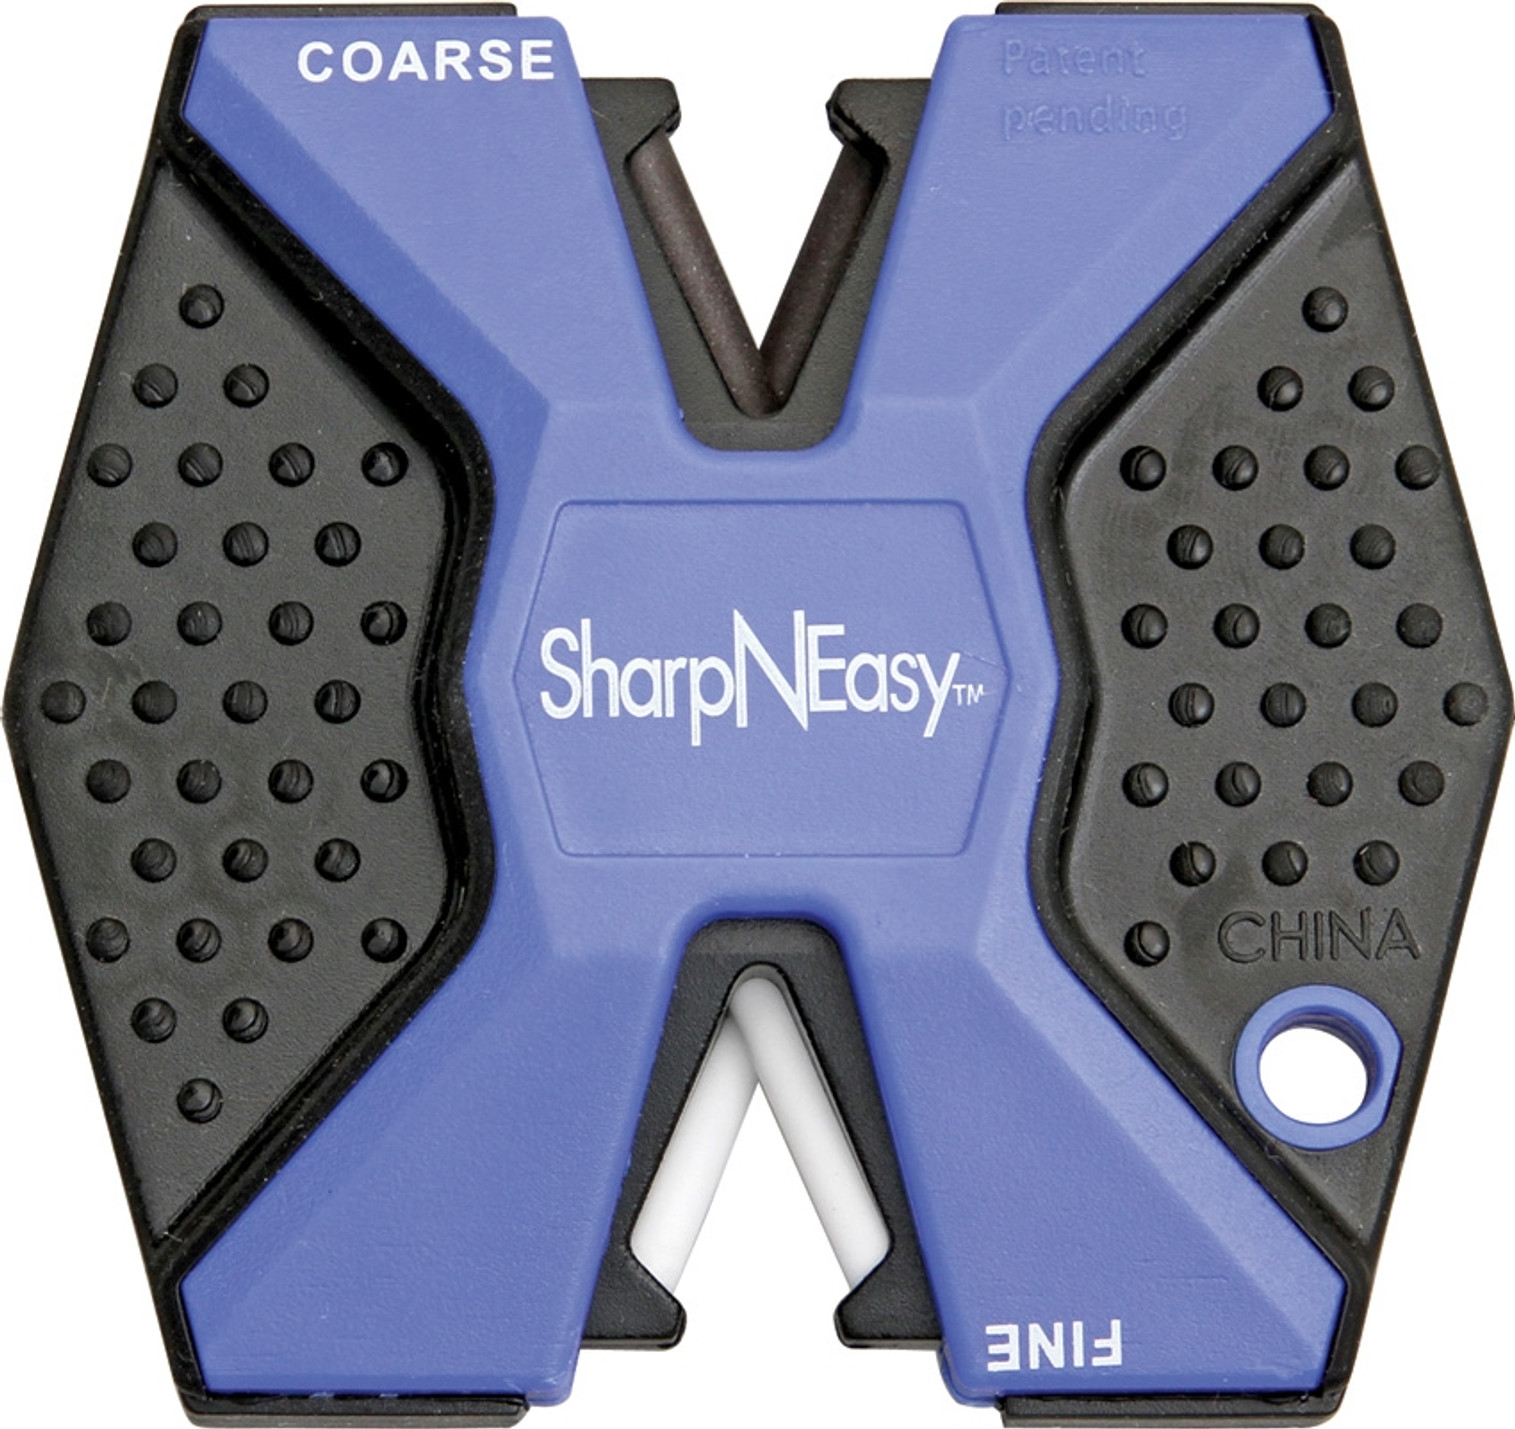 Sharp-N-Easy 2 Stage Sharpener AS334